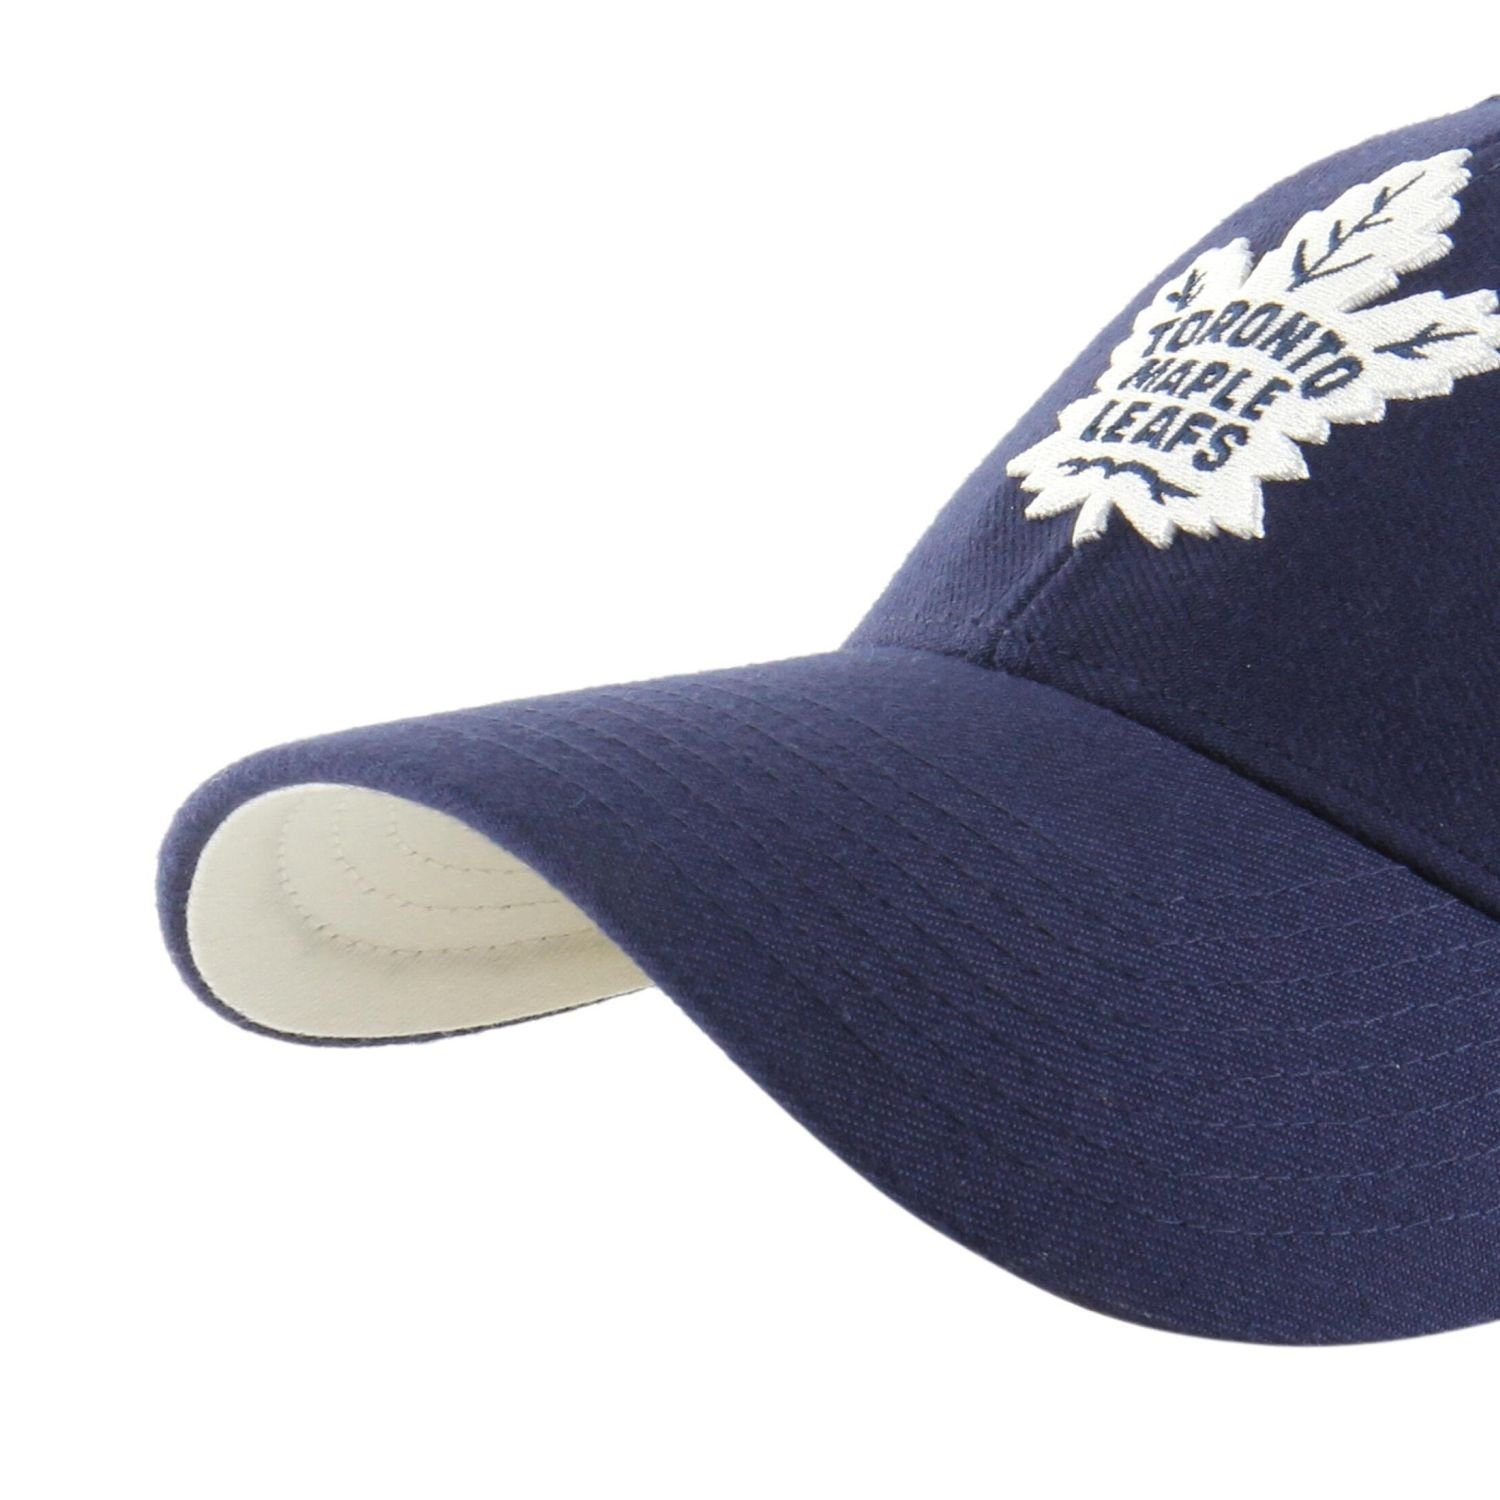 Brand Cap Low BALLPARK Leafs Baseball '47 Maple Toronto